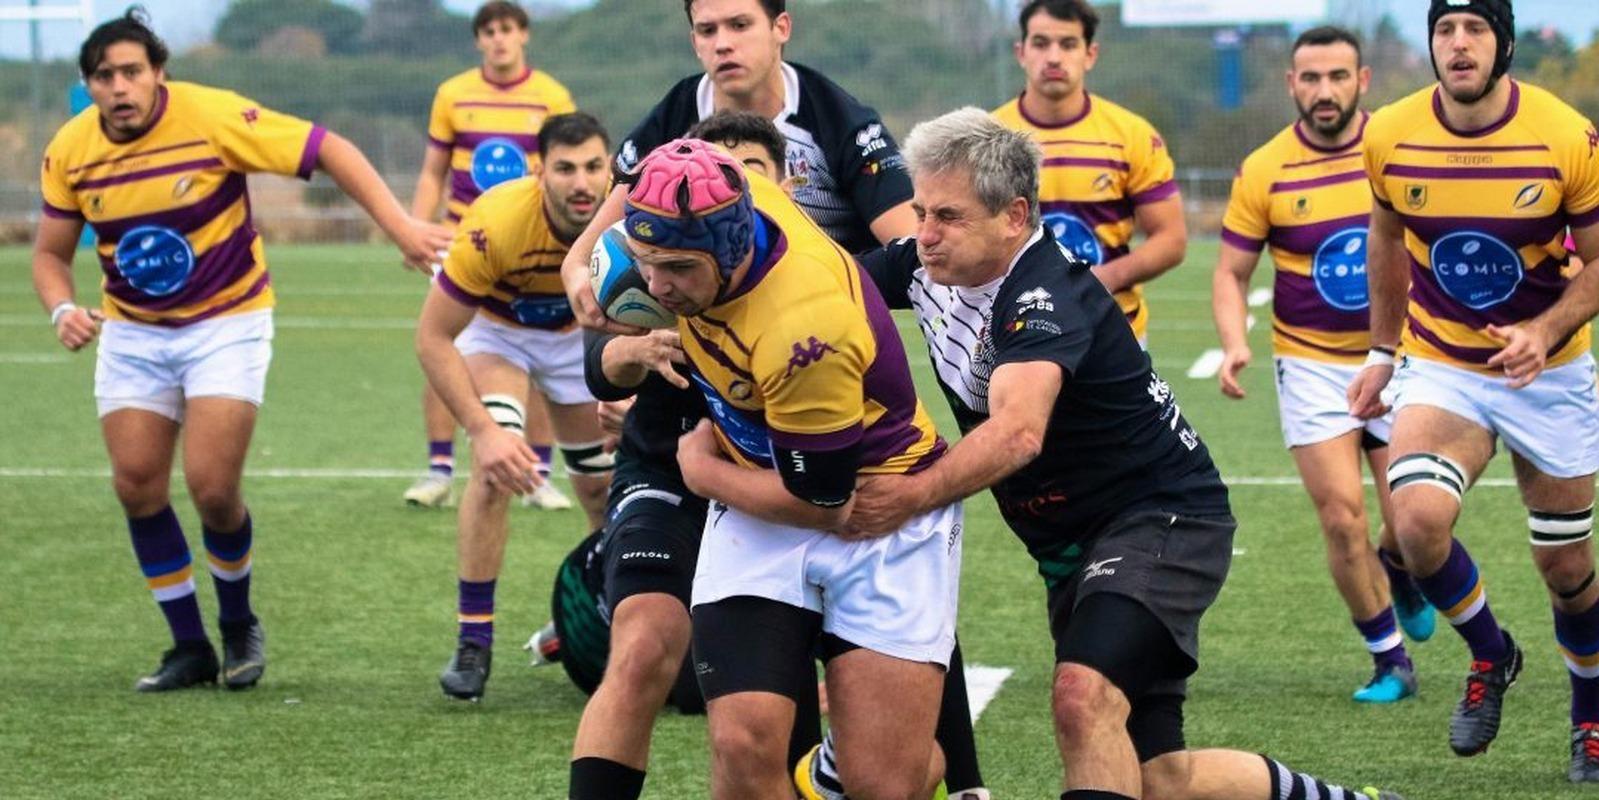 Crónica del partido Pozuelo Rugby Union vs Extremadura C.A.R. Cáceres